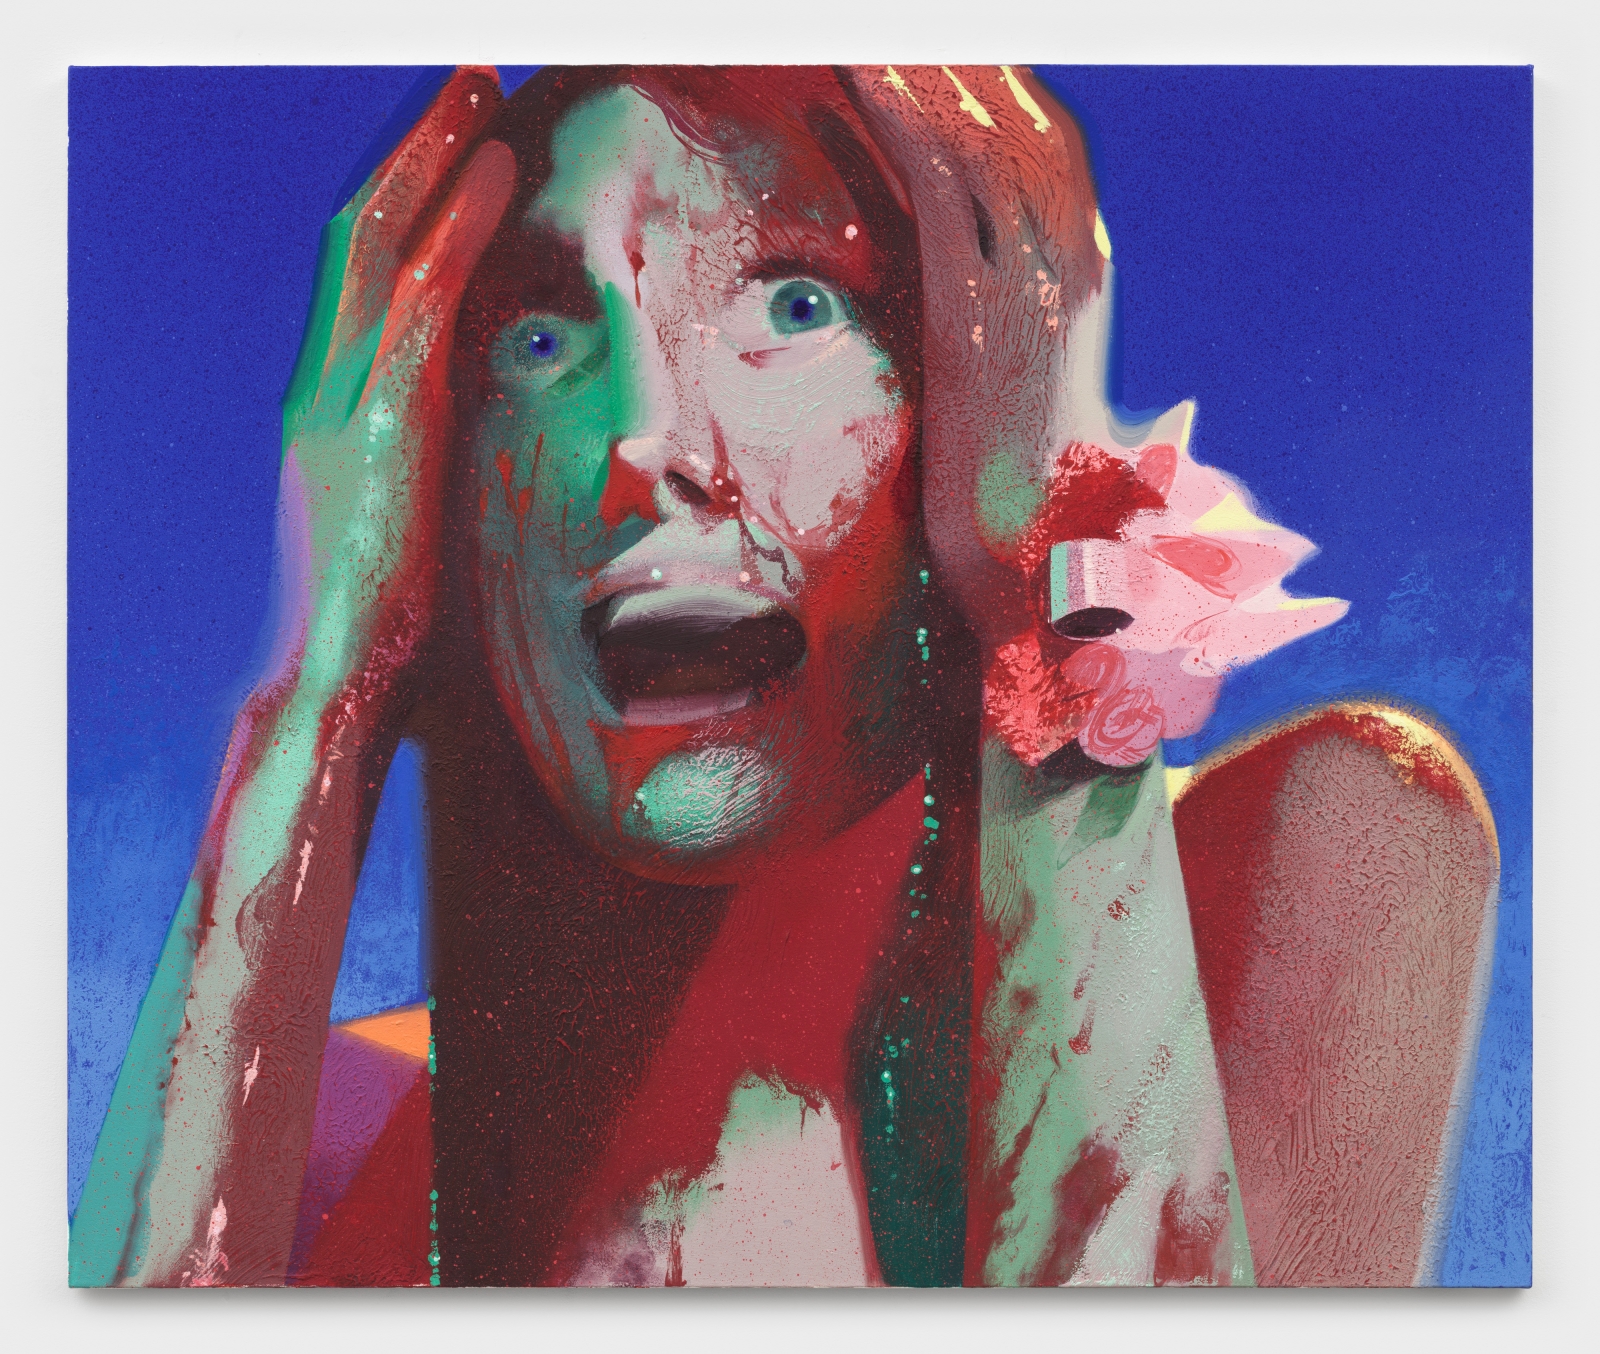 Robin F. Williams
Carrie, 2022
oil and acrylic on canvas
40 x 48 ins.
101.6 x 121.9 cm